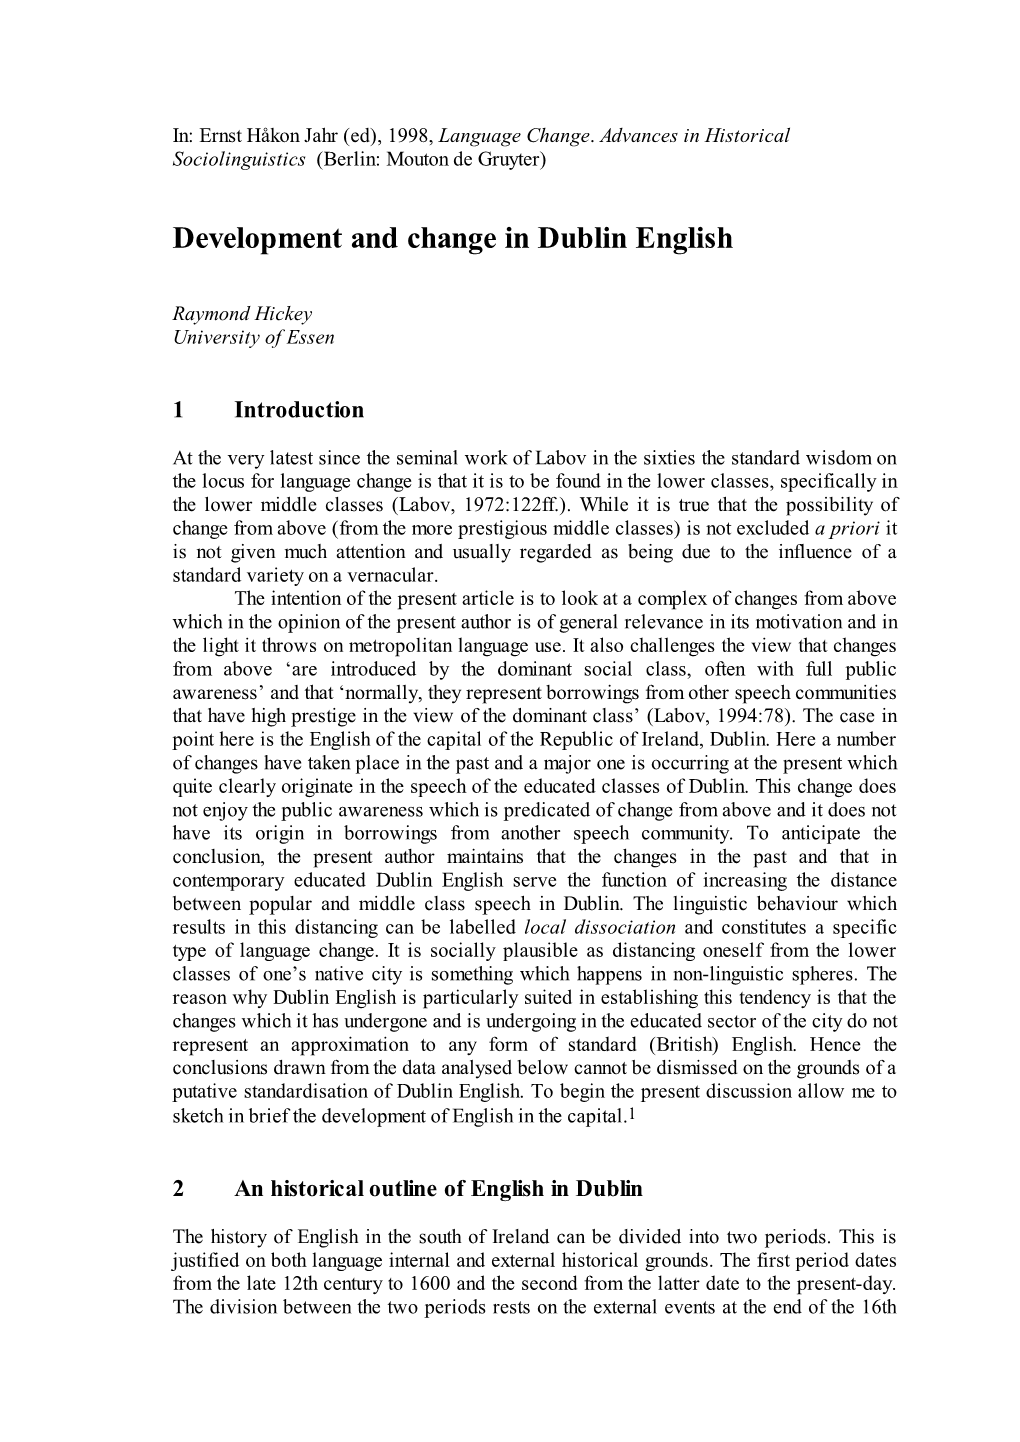 Development and Change in Dublin English